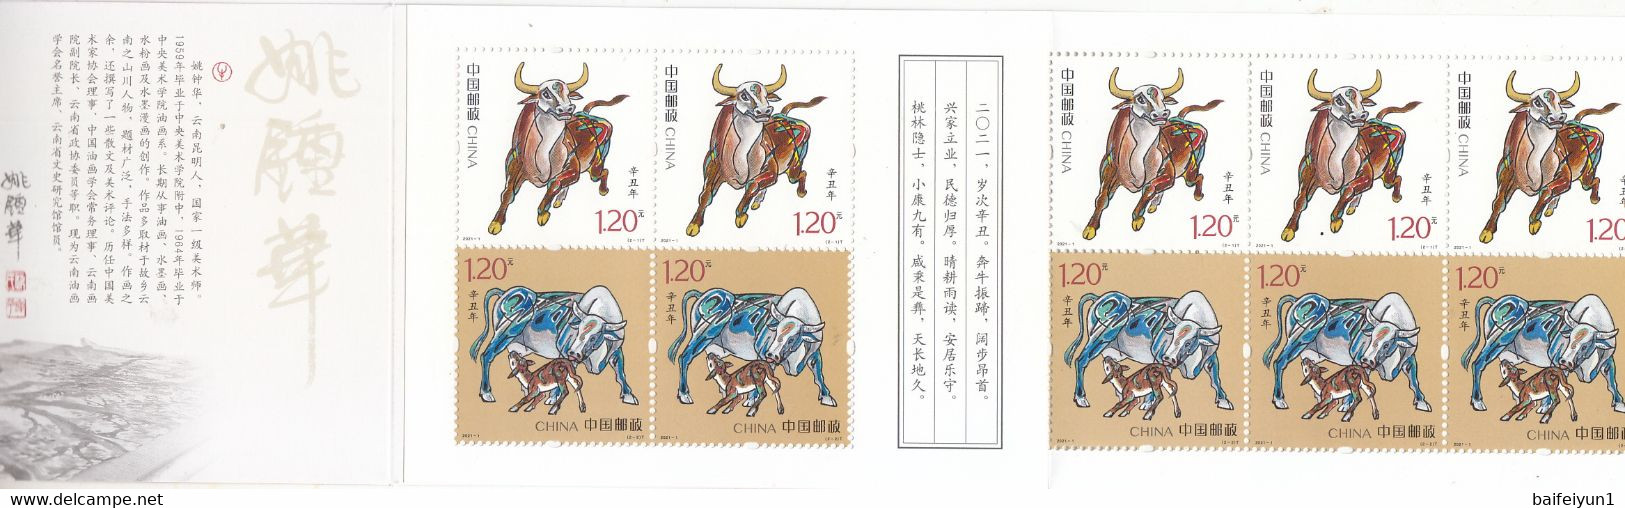 CHINA 2021 Whole Year of Rat  sheetlet Stamp Year set (8v)